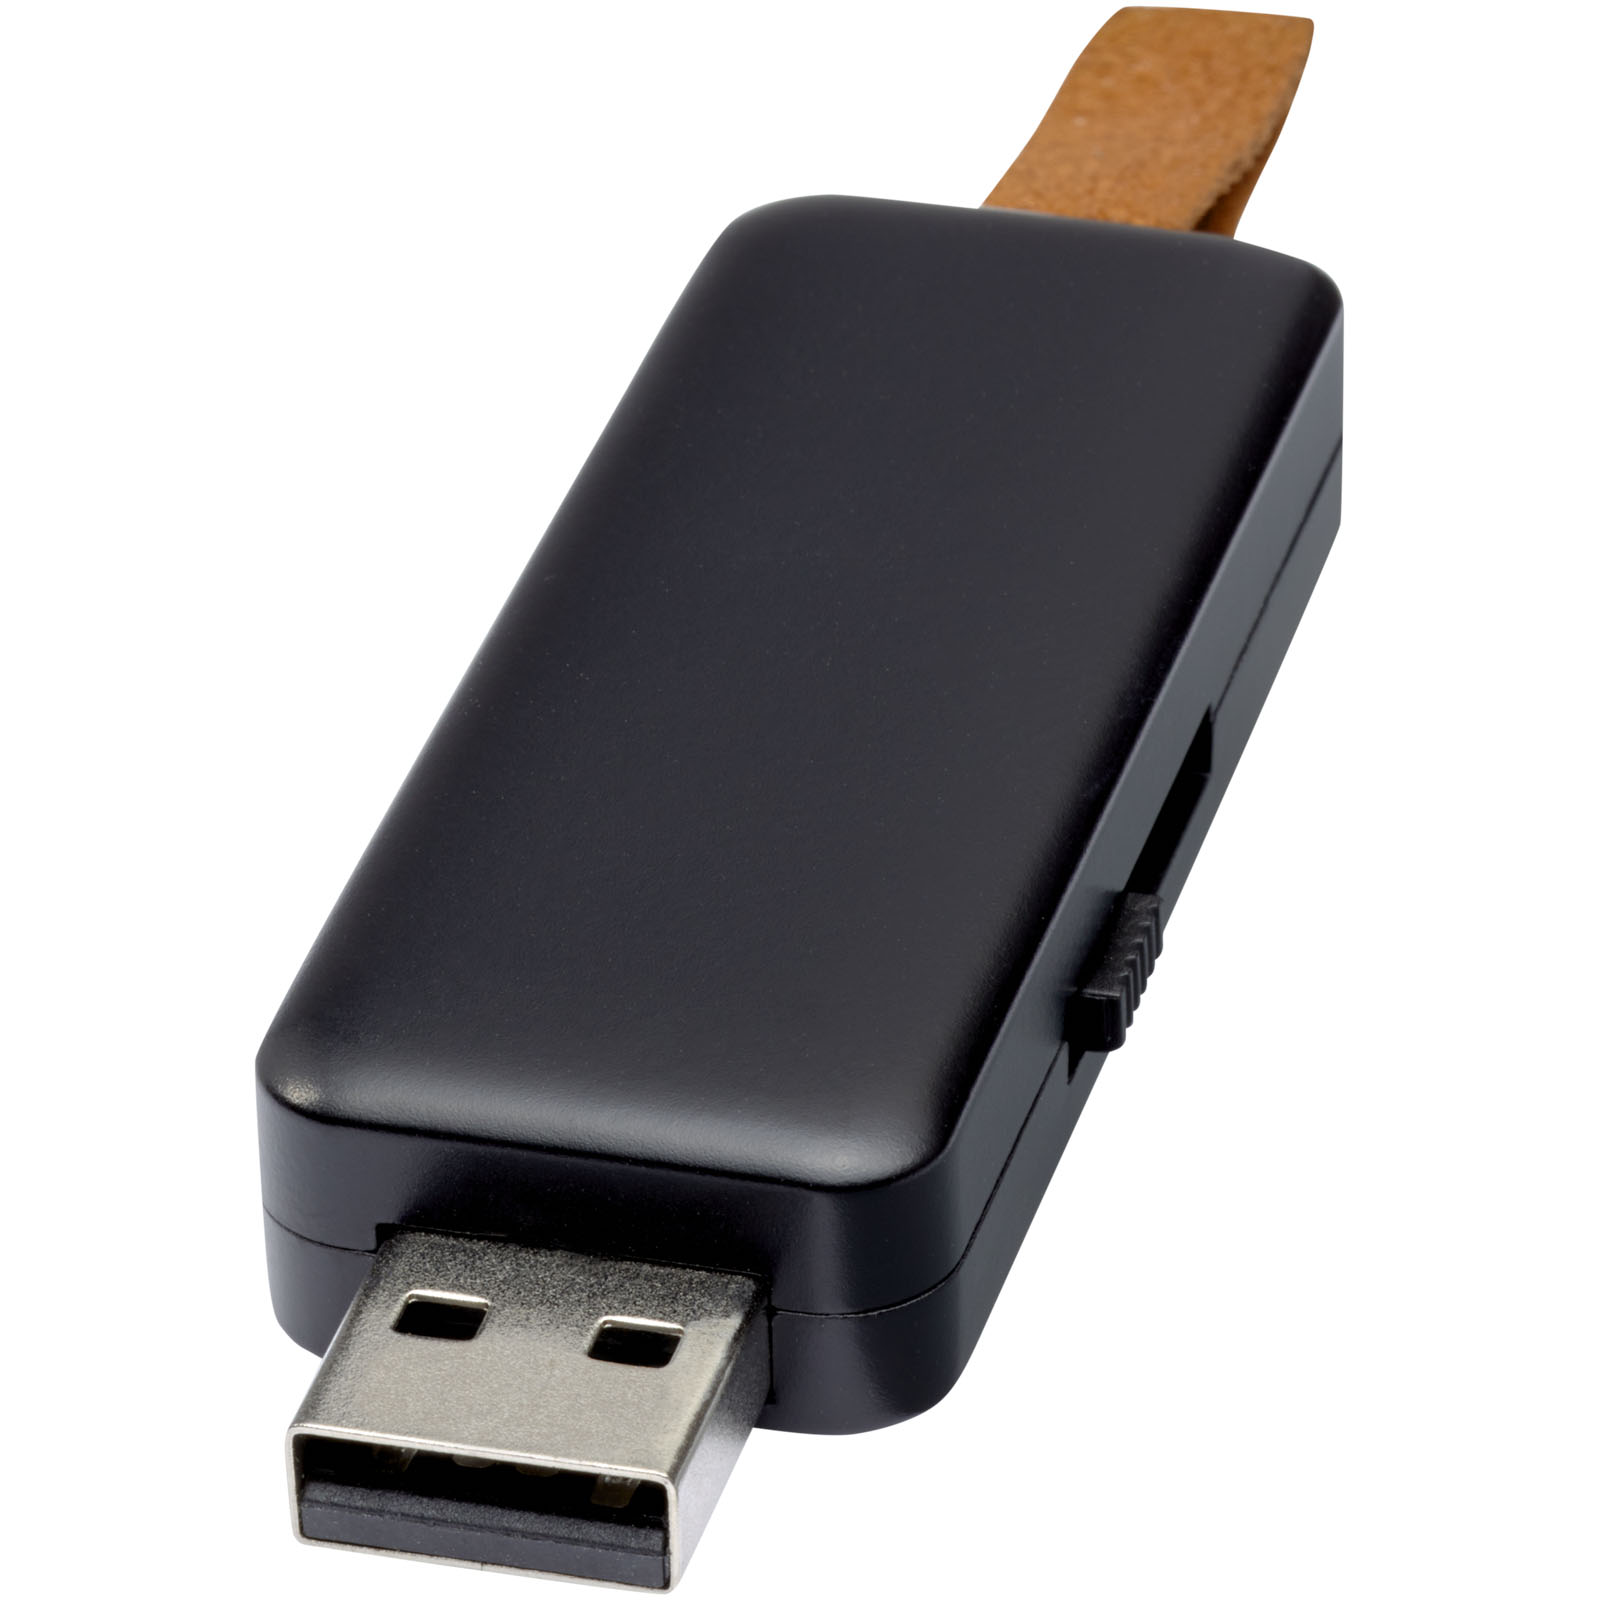 Clés USB publicitaires - Clé USB lumineuse Gleam 4 Go - 0